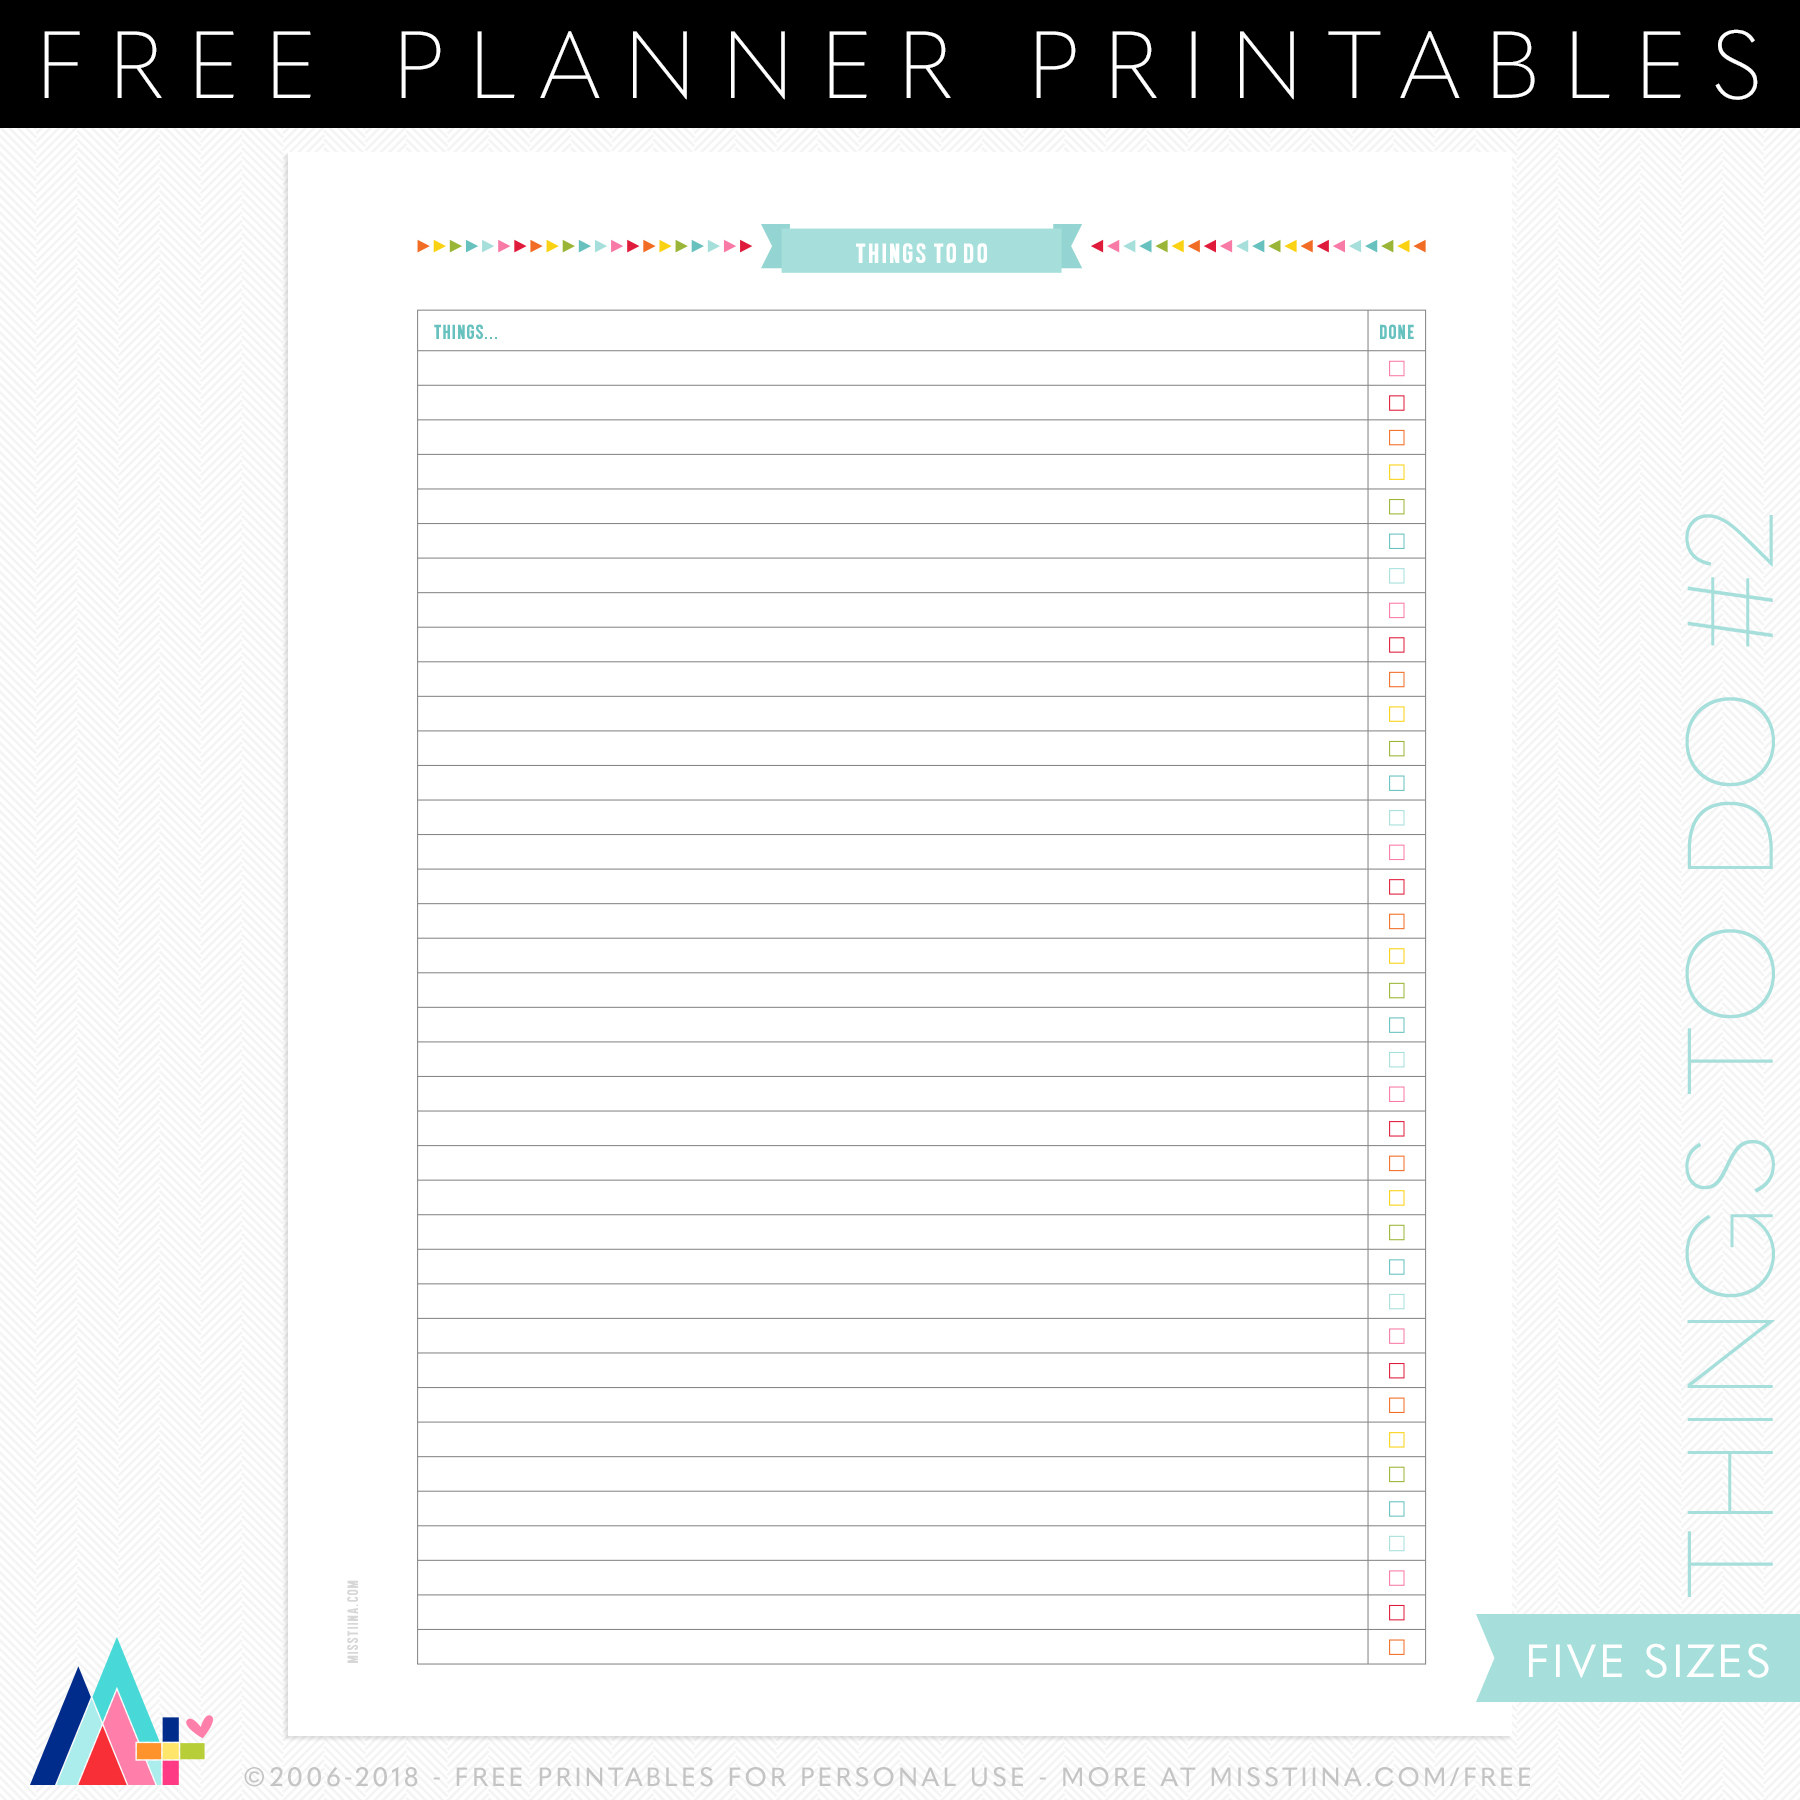 Planner Printables | Misstiina - Free 2018 Planner Printable